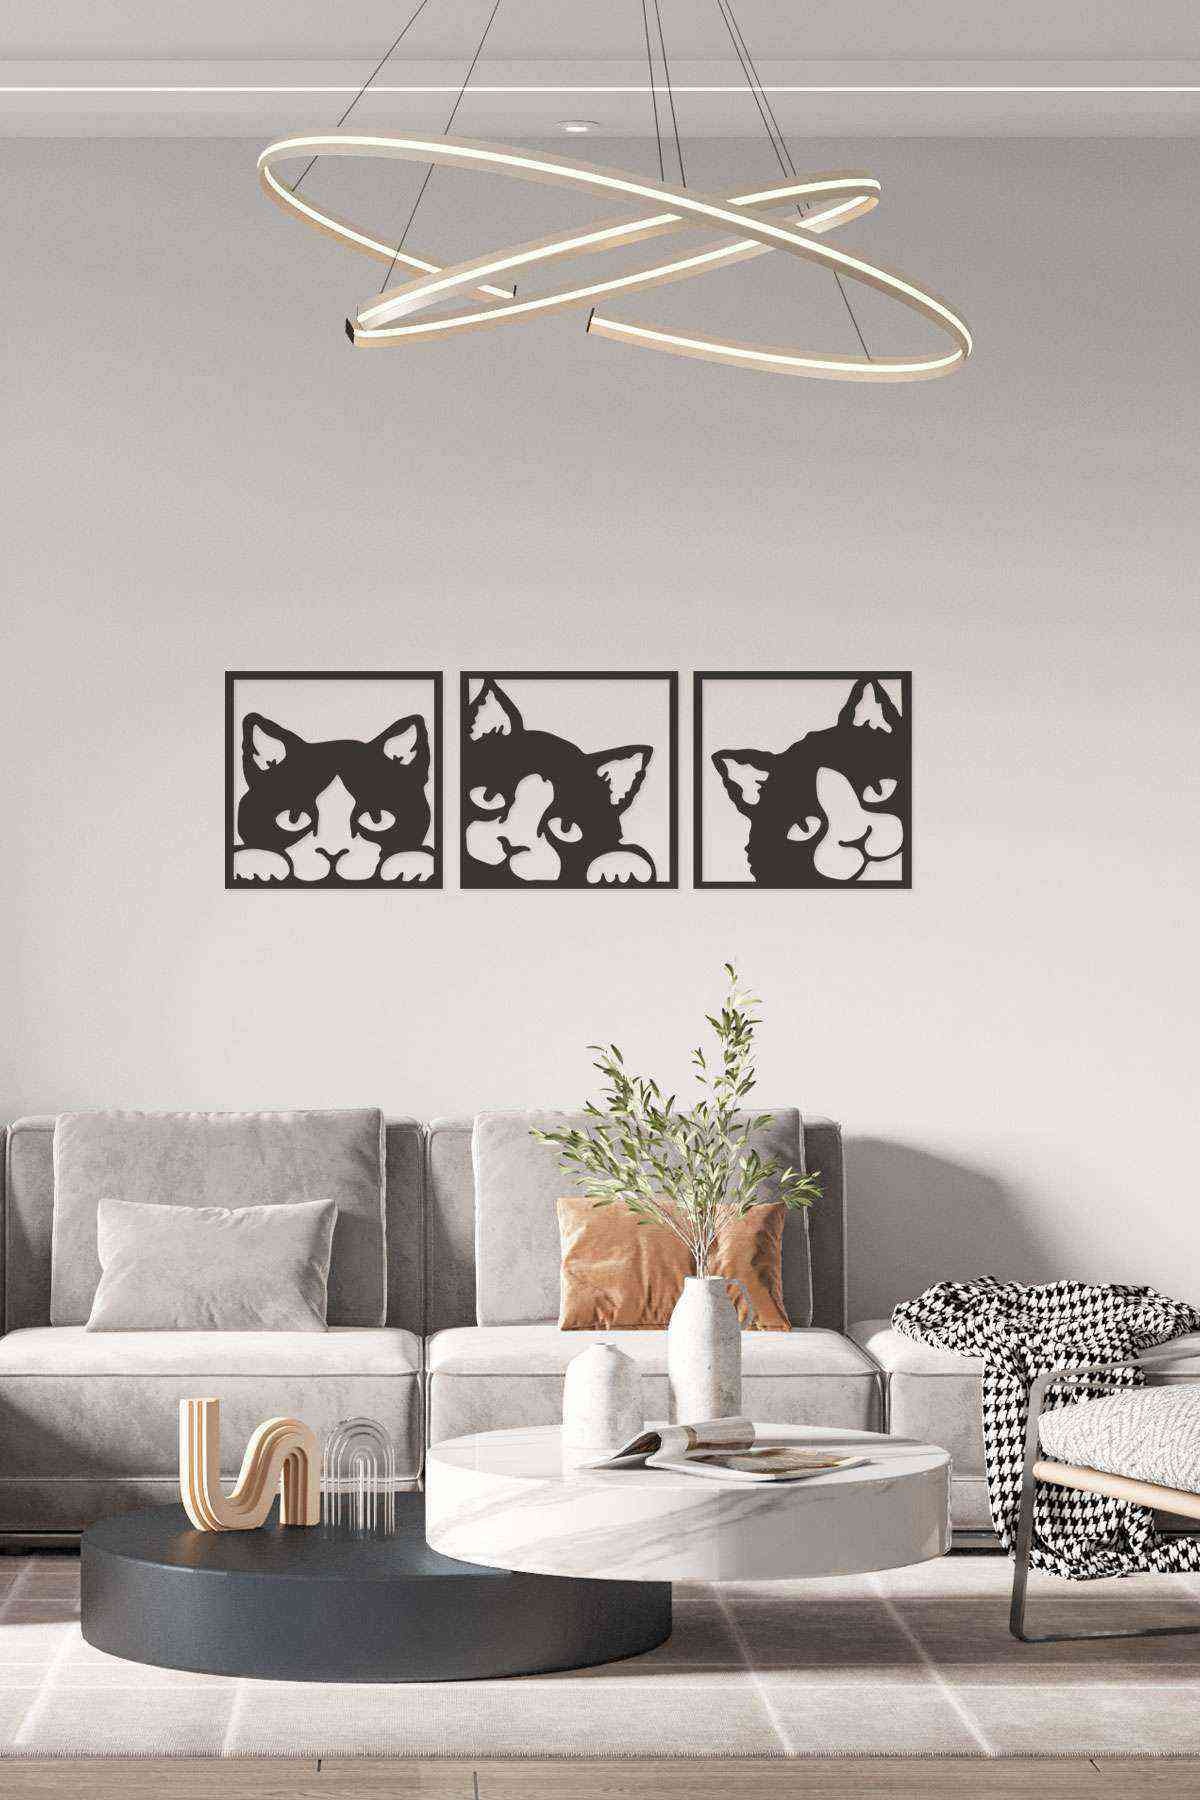 Kedi Cats Figürlü 3D Mdf Tablo Evinize Ofisinize Yeni Tarz Wall